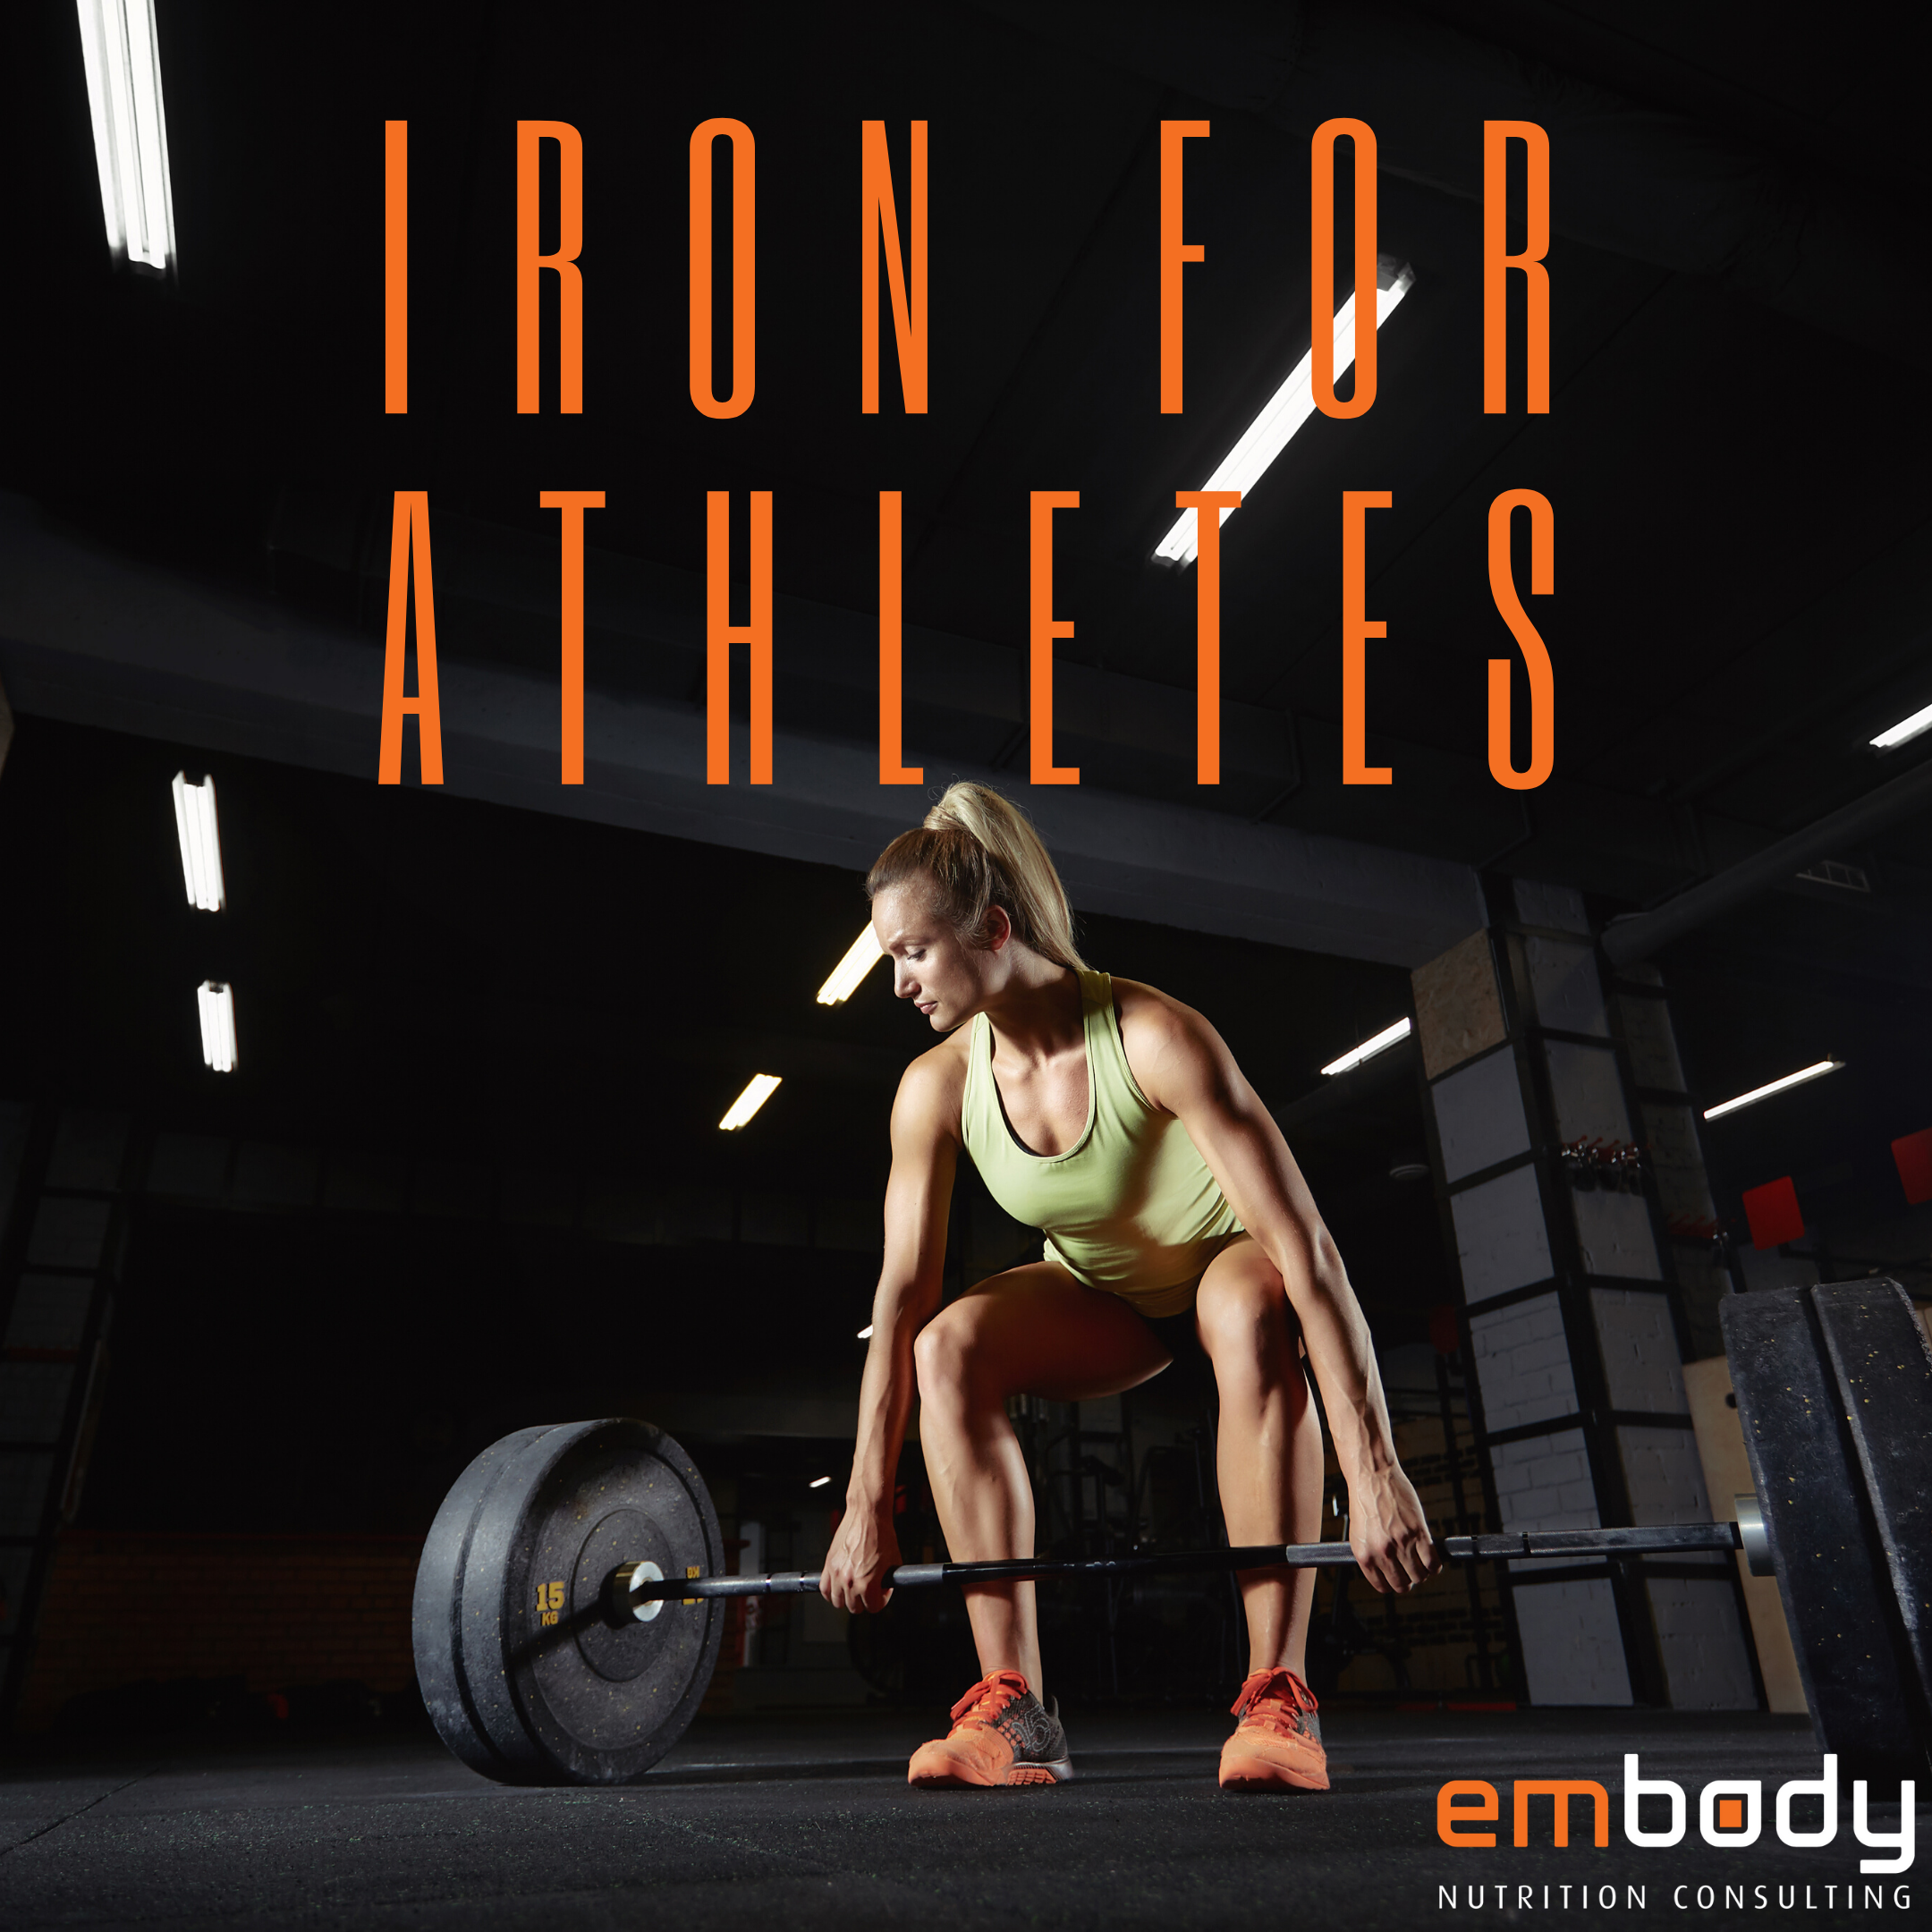 Iron for Athletes